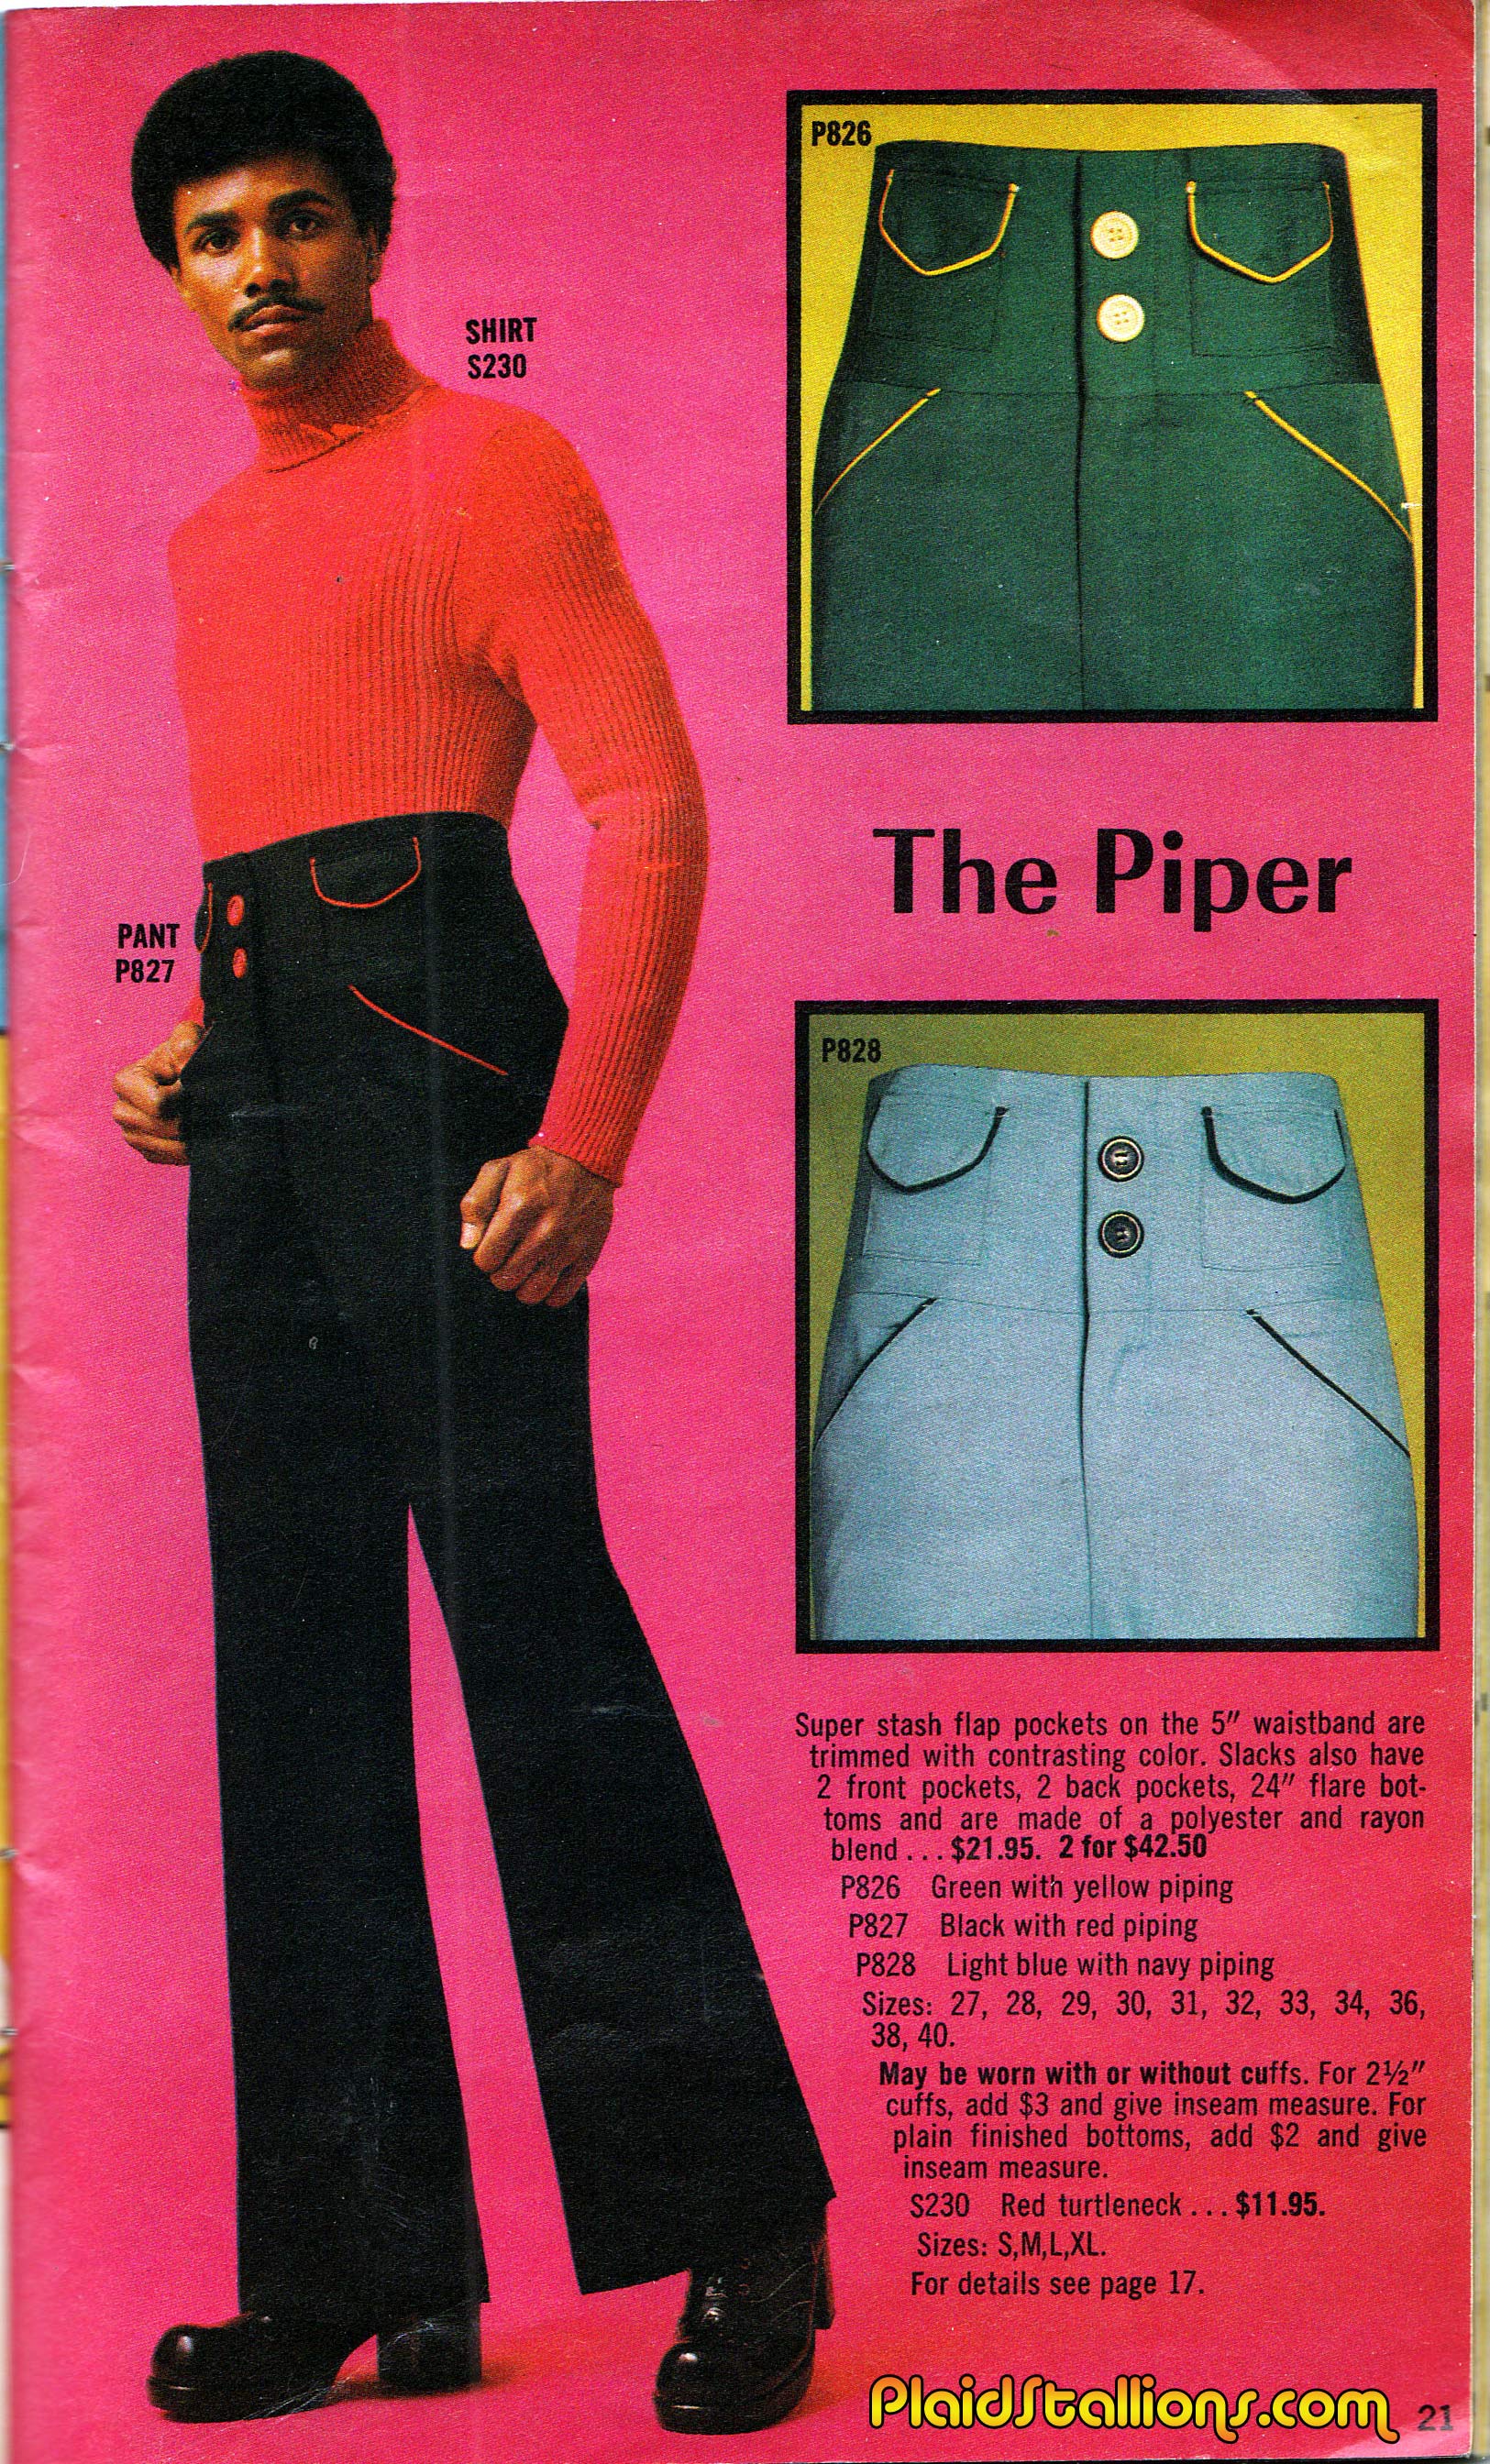 The Piper - PS